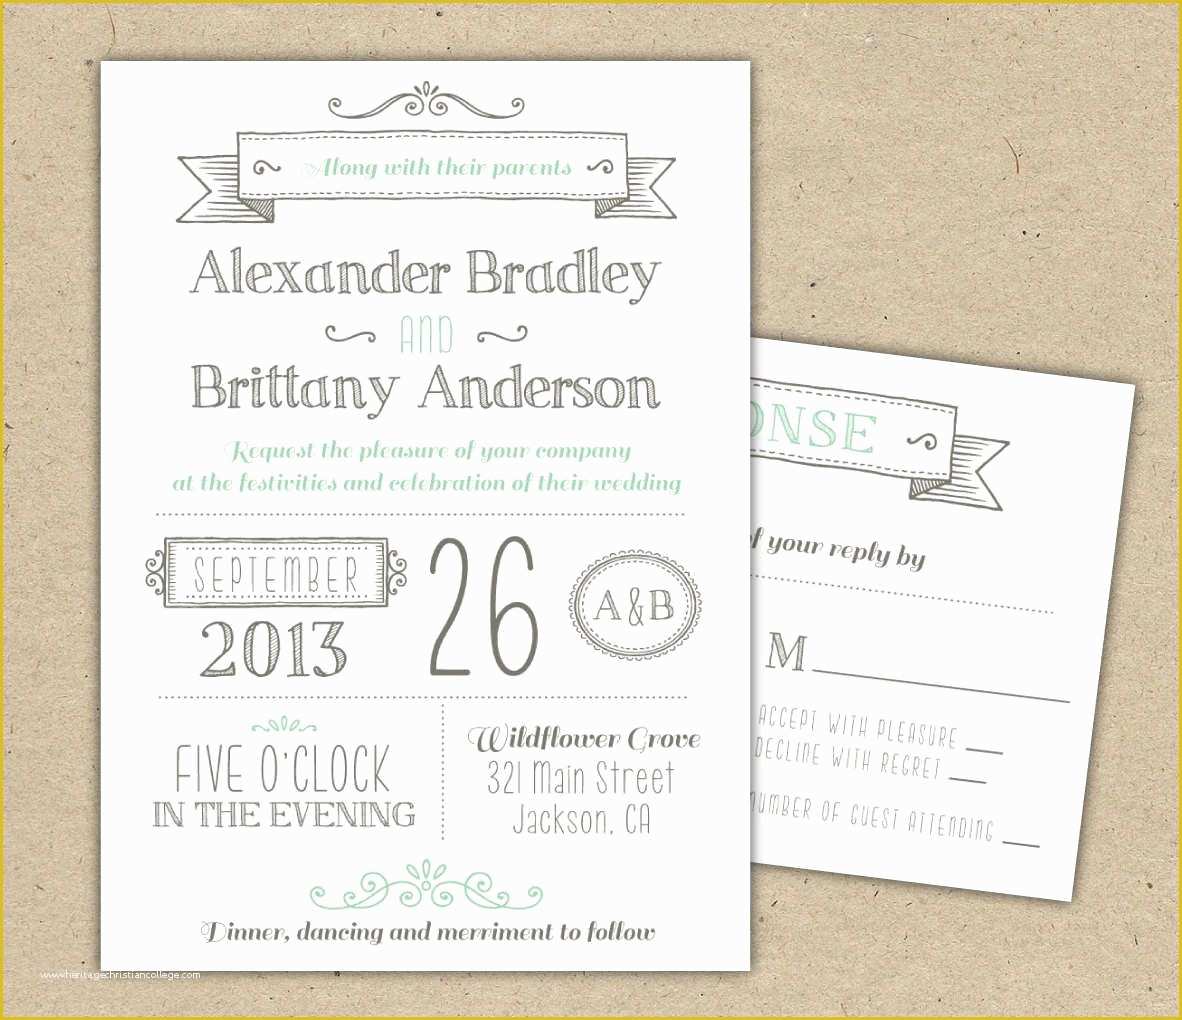 Free Printable Wedding Invitations Templates Downloads Of Wedding Invitations Template Free Download